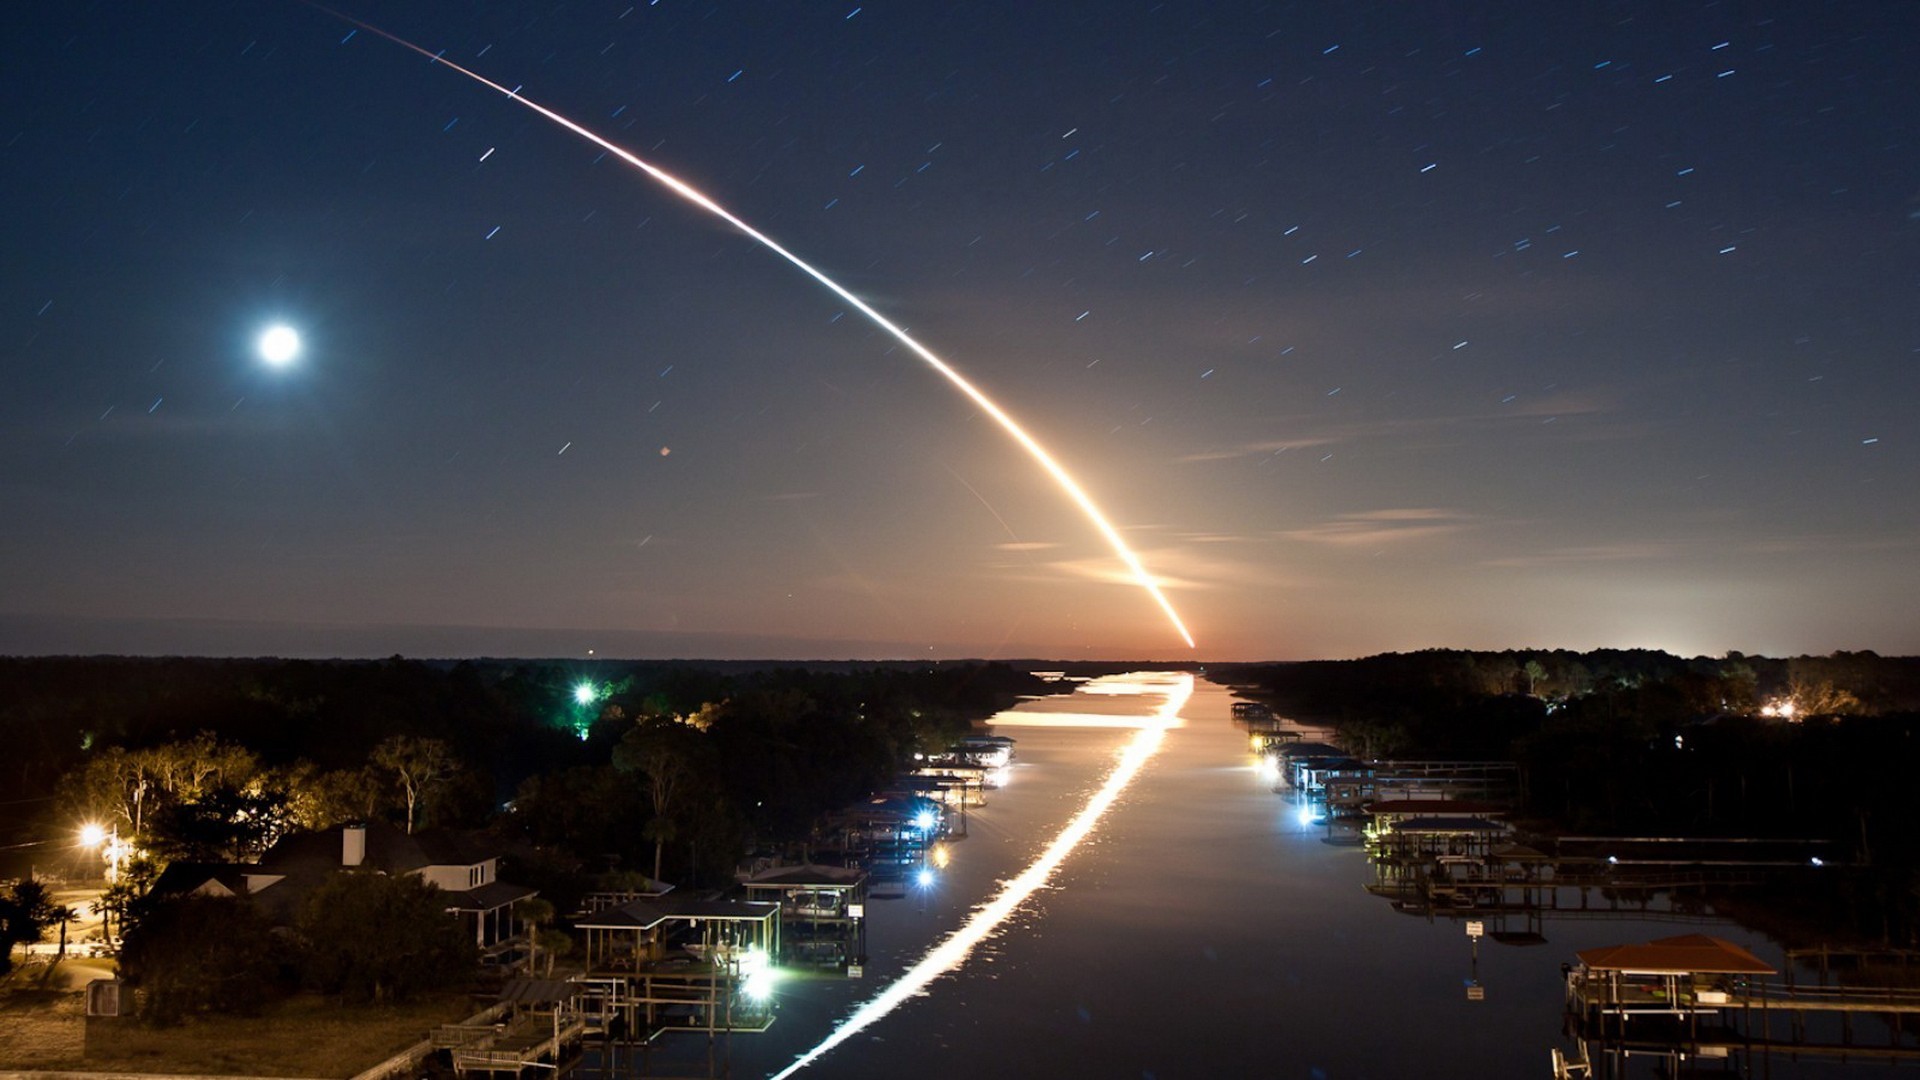 Digital Art Landscape Night Stars Star Trails Shooting Stars Space City Moon Boat River 1920x1080